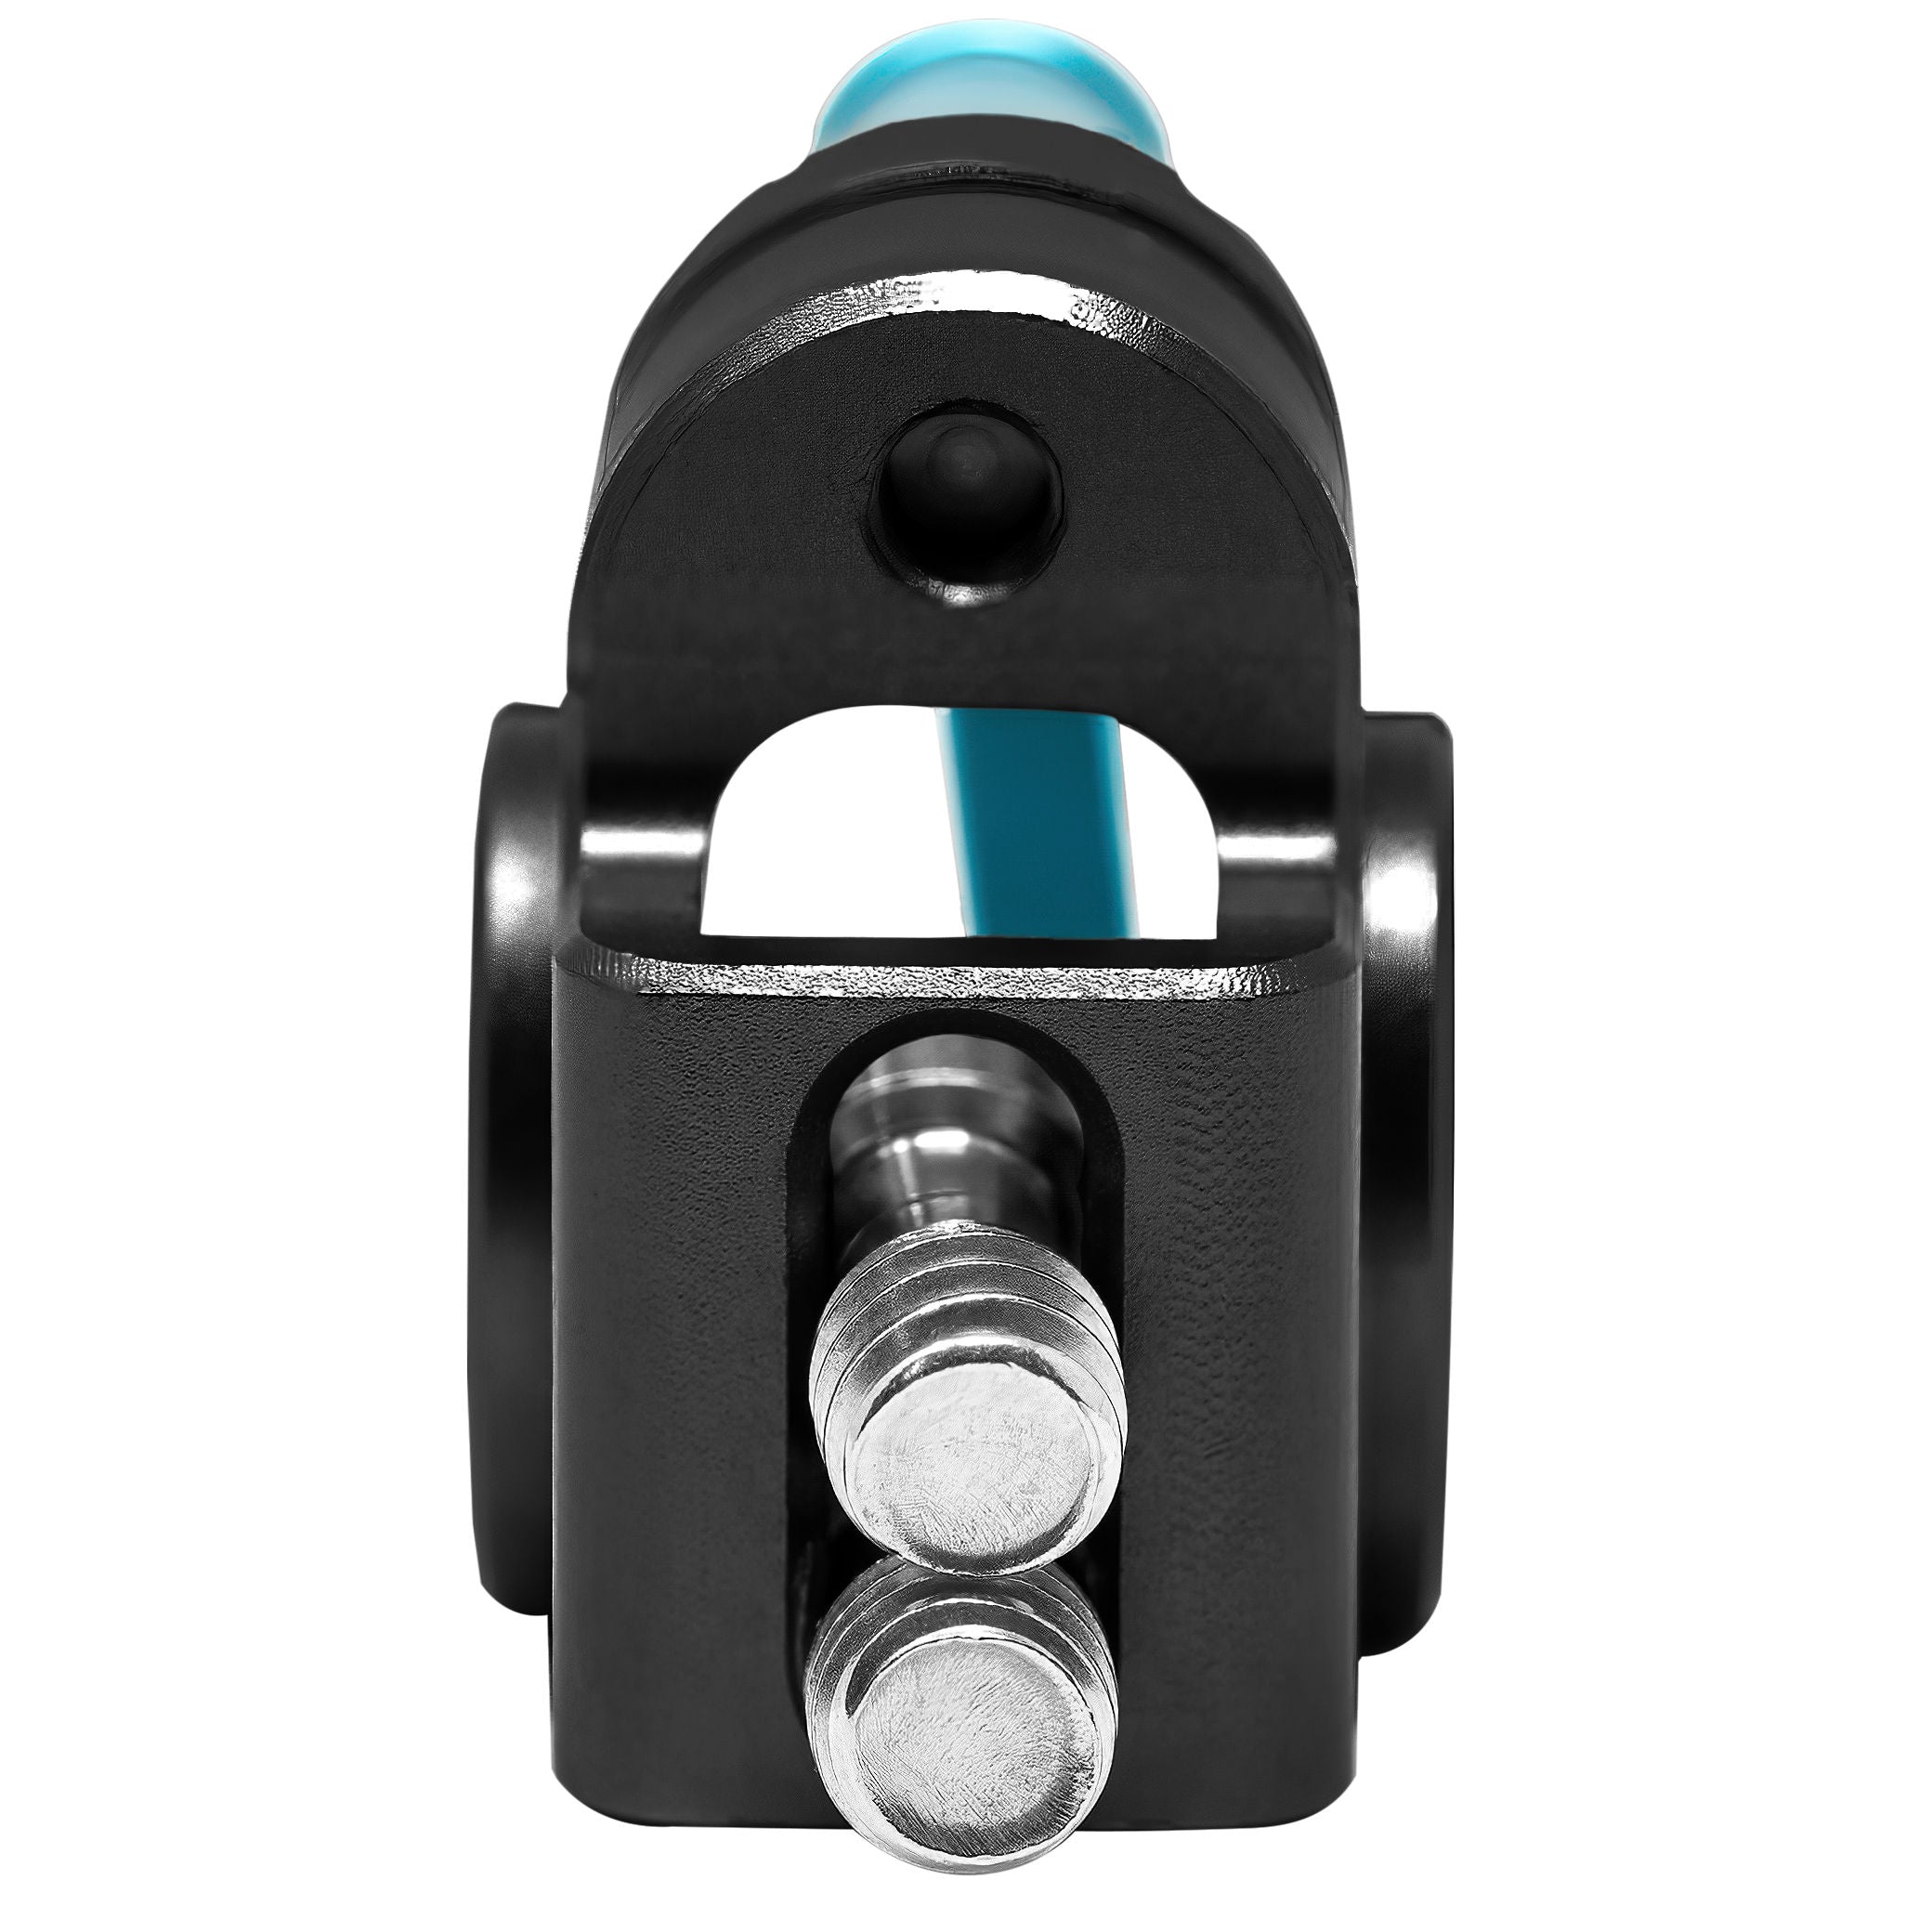 Kondor Blue 15mm Single Rod Clamp for Focus Gears (Black)